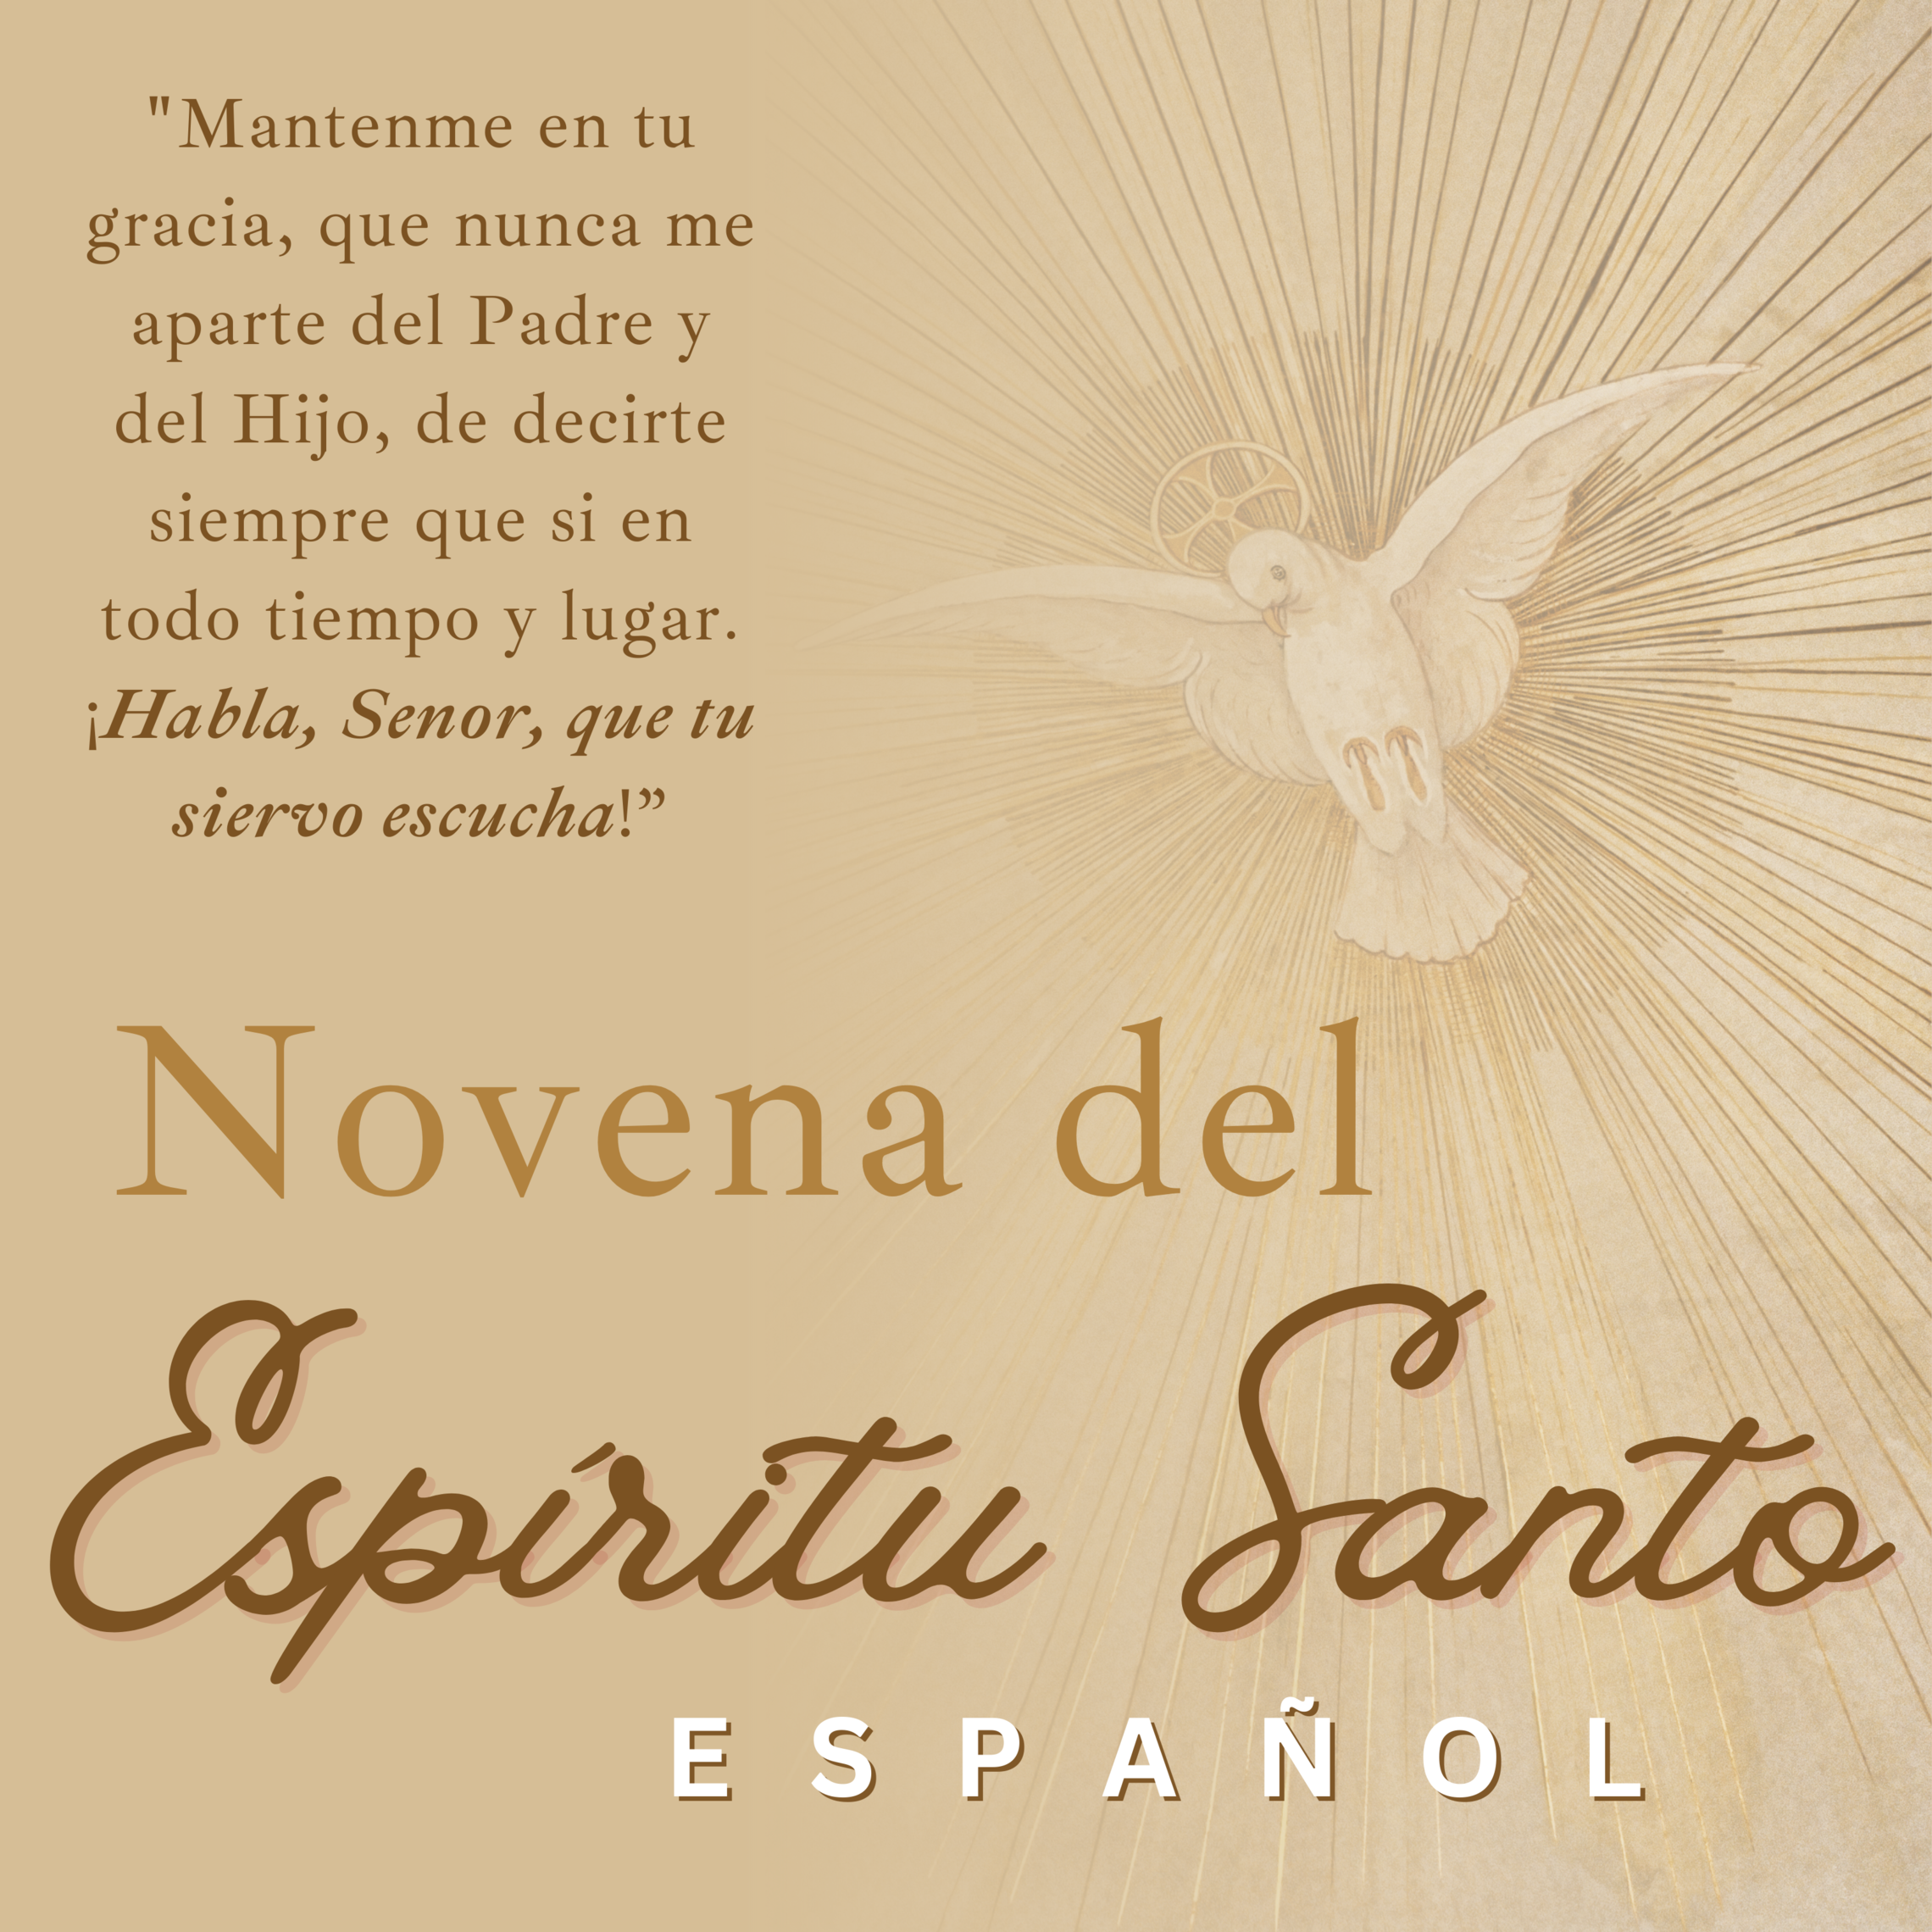 Holy Spirit Novena Image Spanish